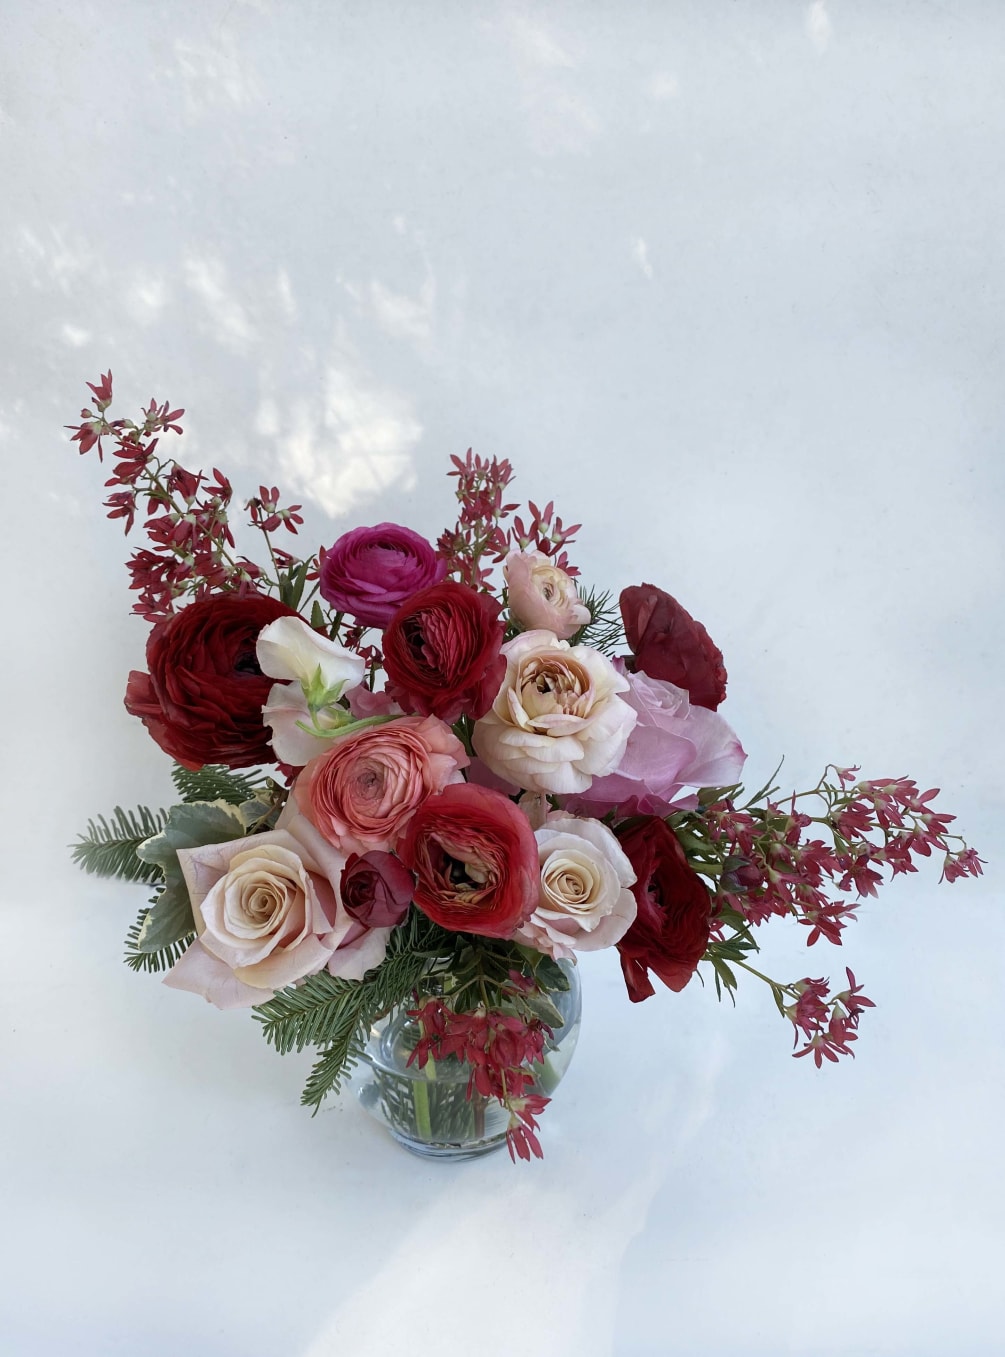 Beautiful warm blushing colors adorn this arrangement of ranunuclus, roses, and seasonal